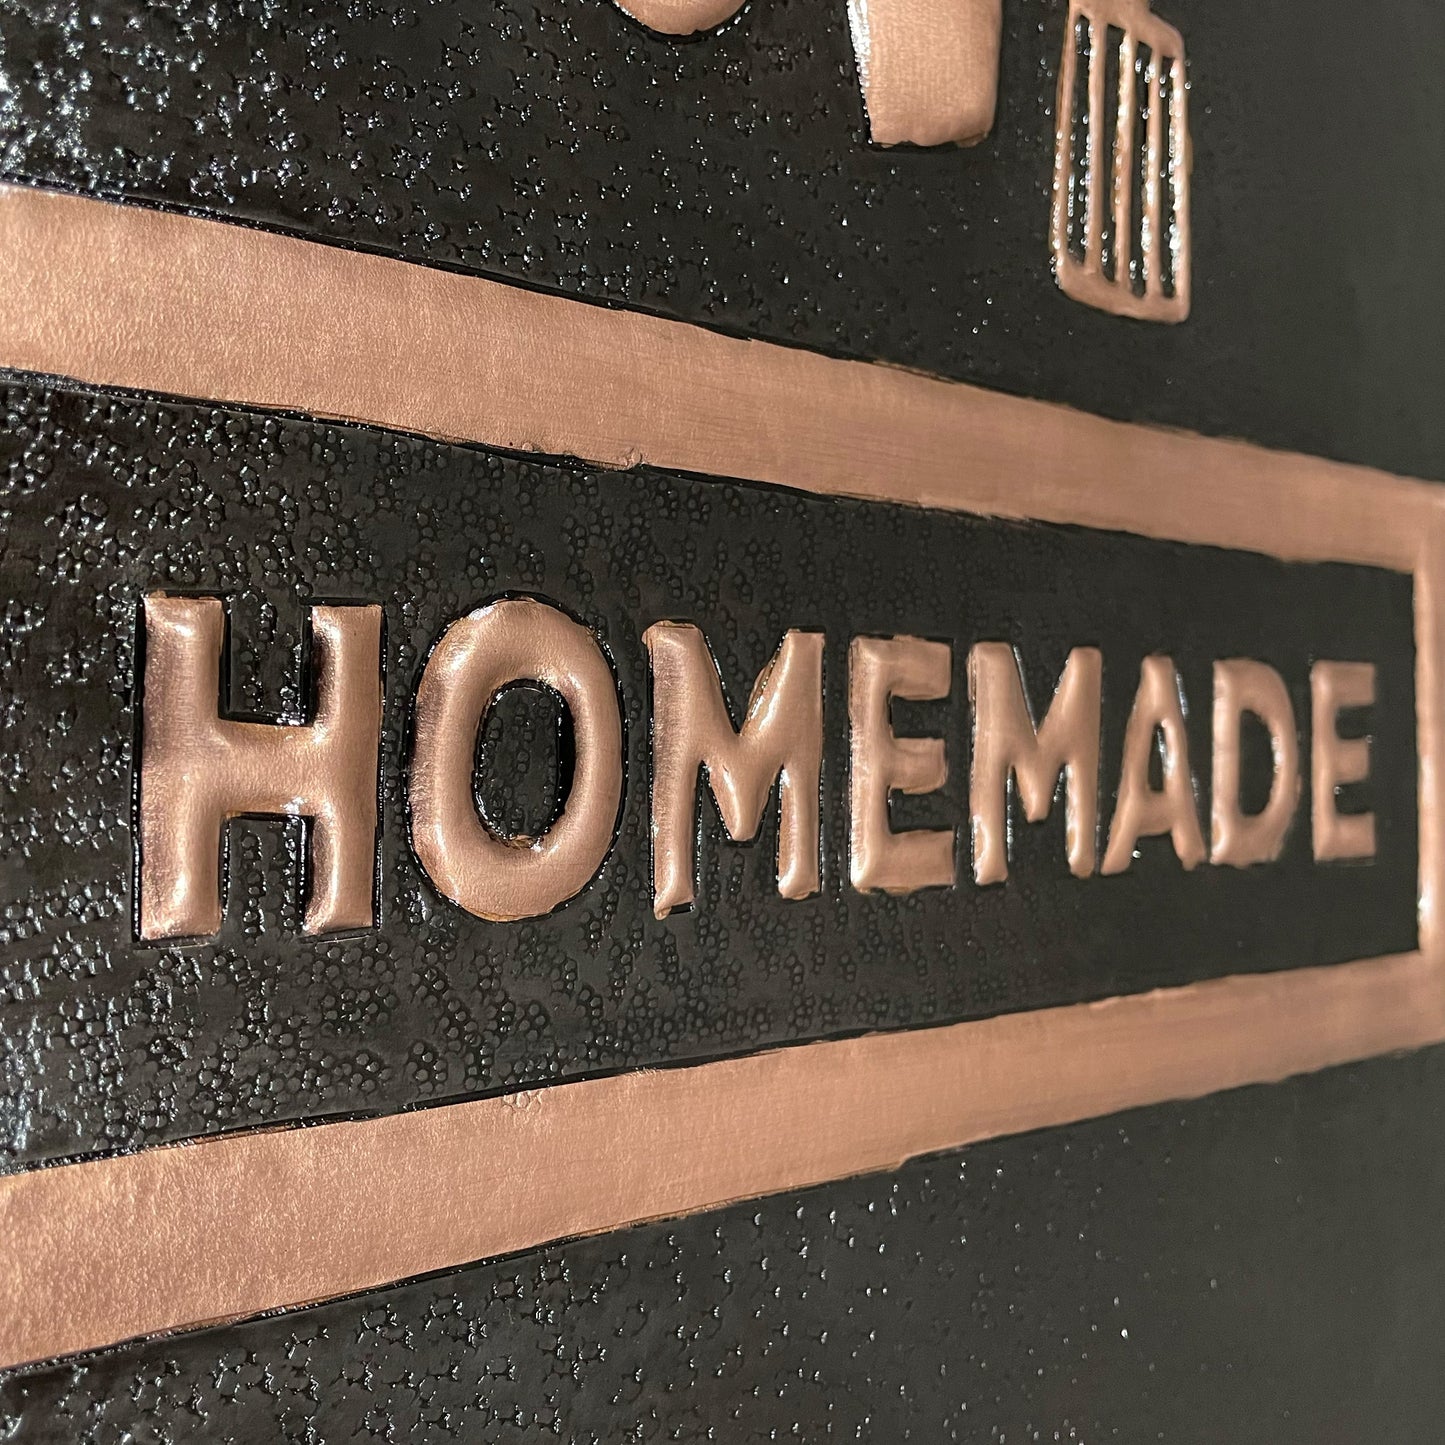 "Happiness is Homemade" Kitchen Backsplash Tile - 18x24 Black